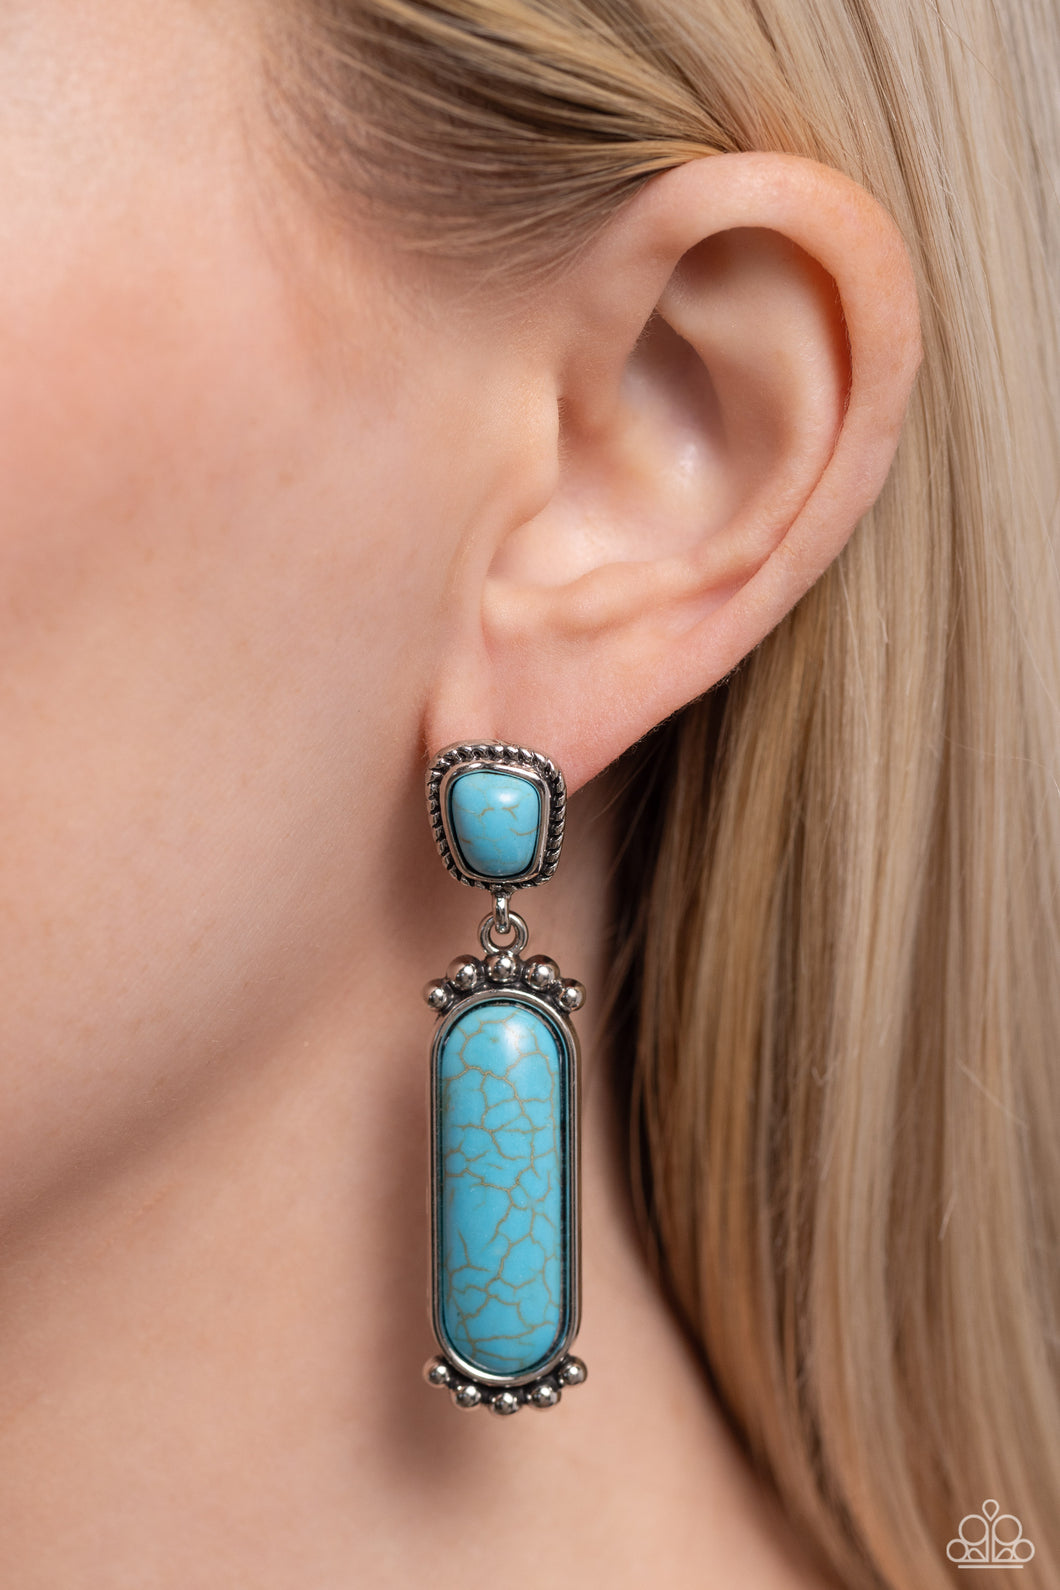 Paparazzi Southern Charm - Blue Earrings